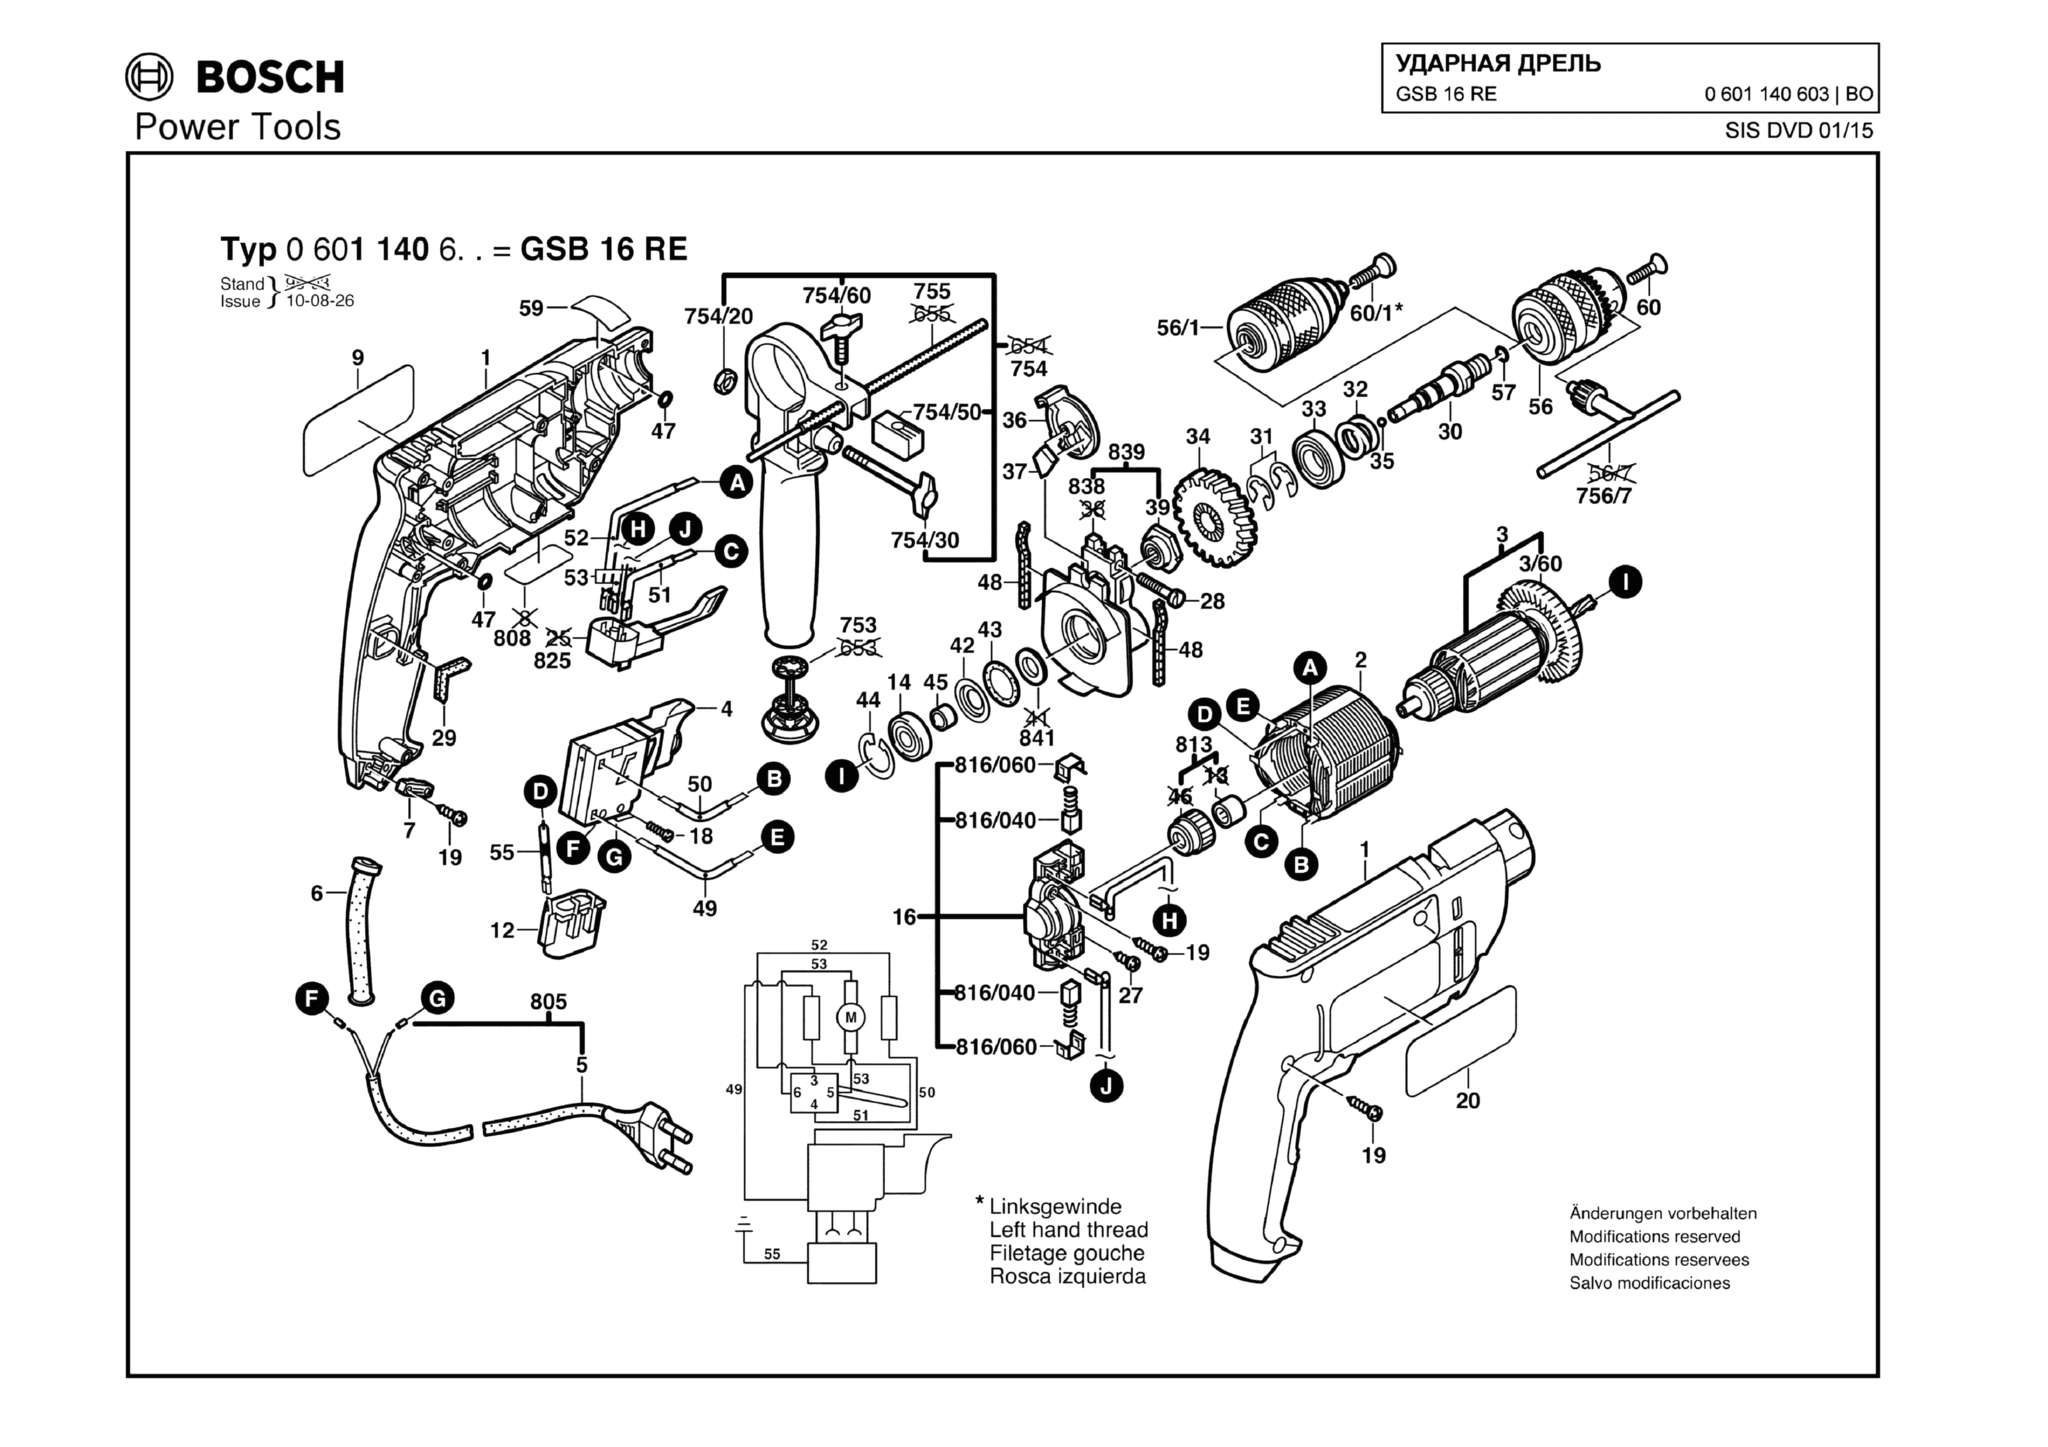 Запчасти, схема и деталировка Bosch GSB 16 RE (ТИП 0601140603)